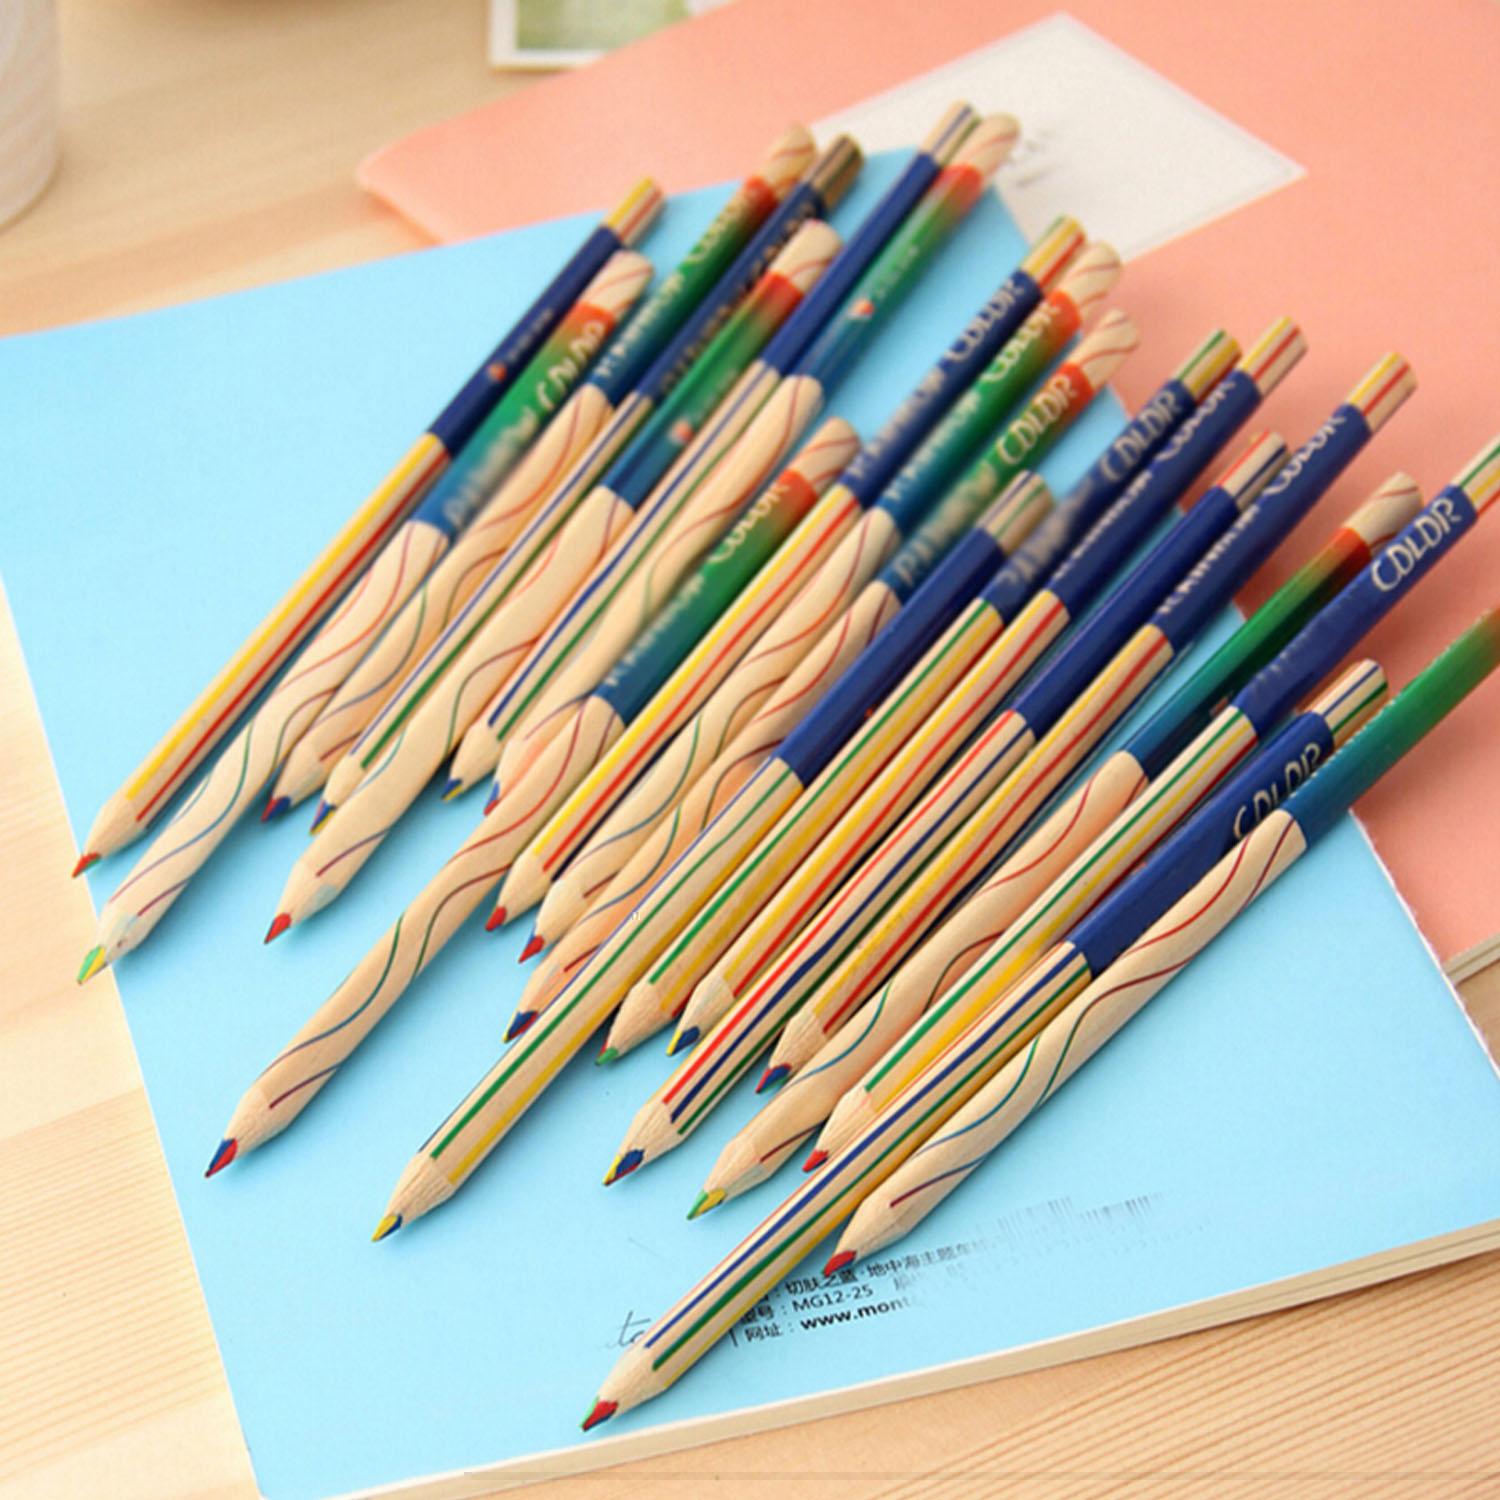 Craft and Arts kuru boya kalemi renkler